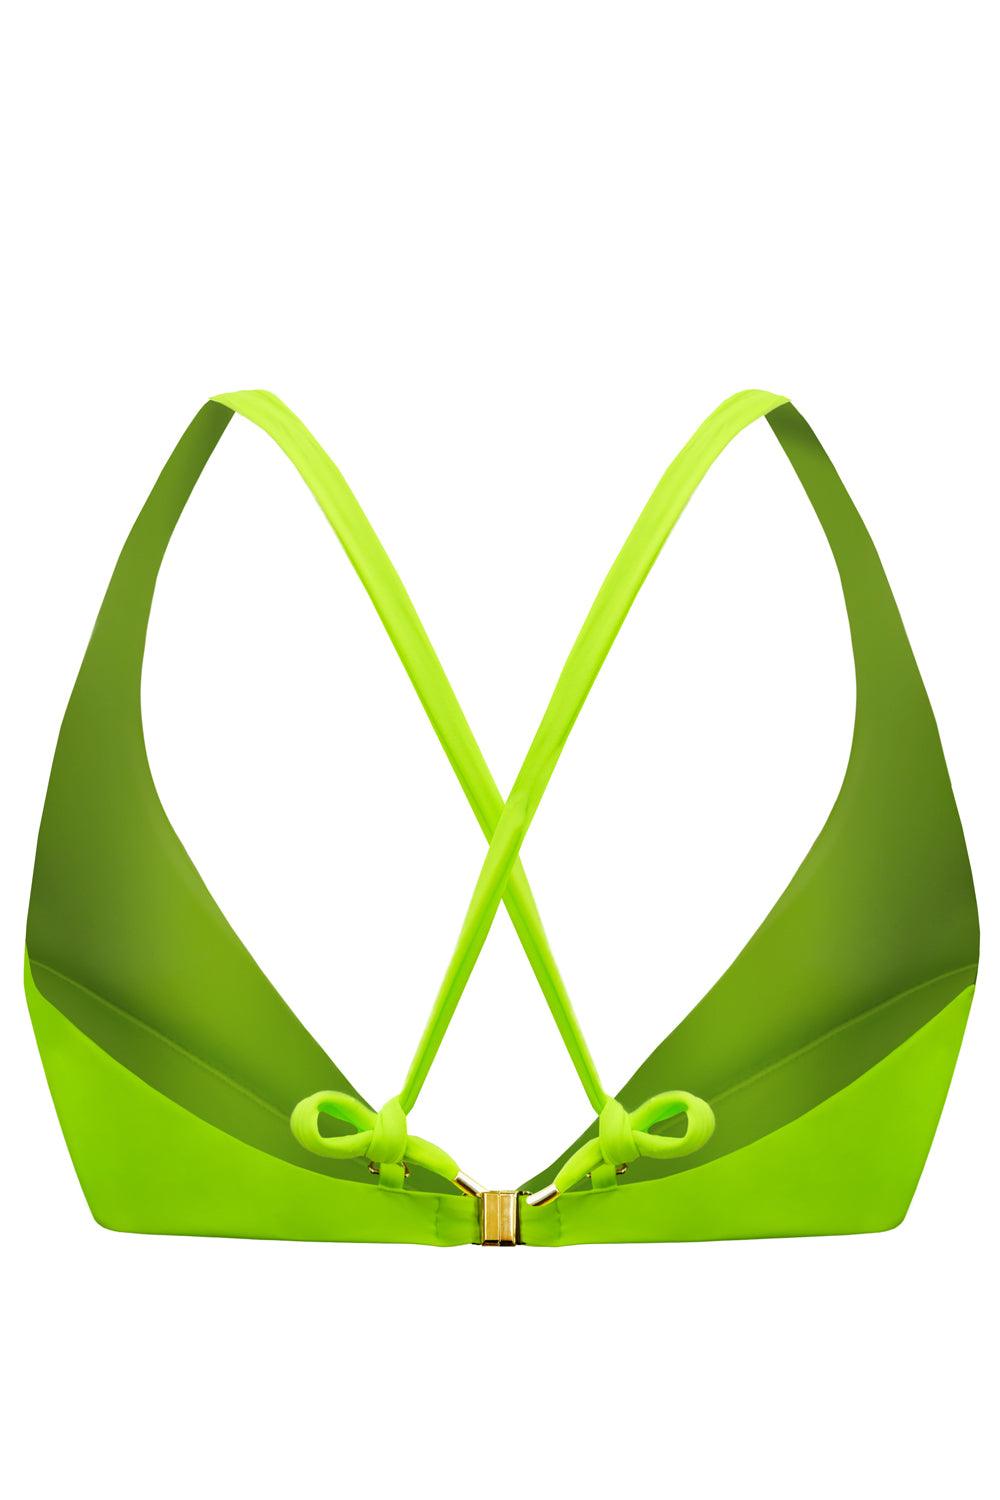 Radiya Greenery bikini top - Bikini top by yesUndress. Shop on yesUndress